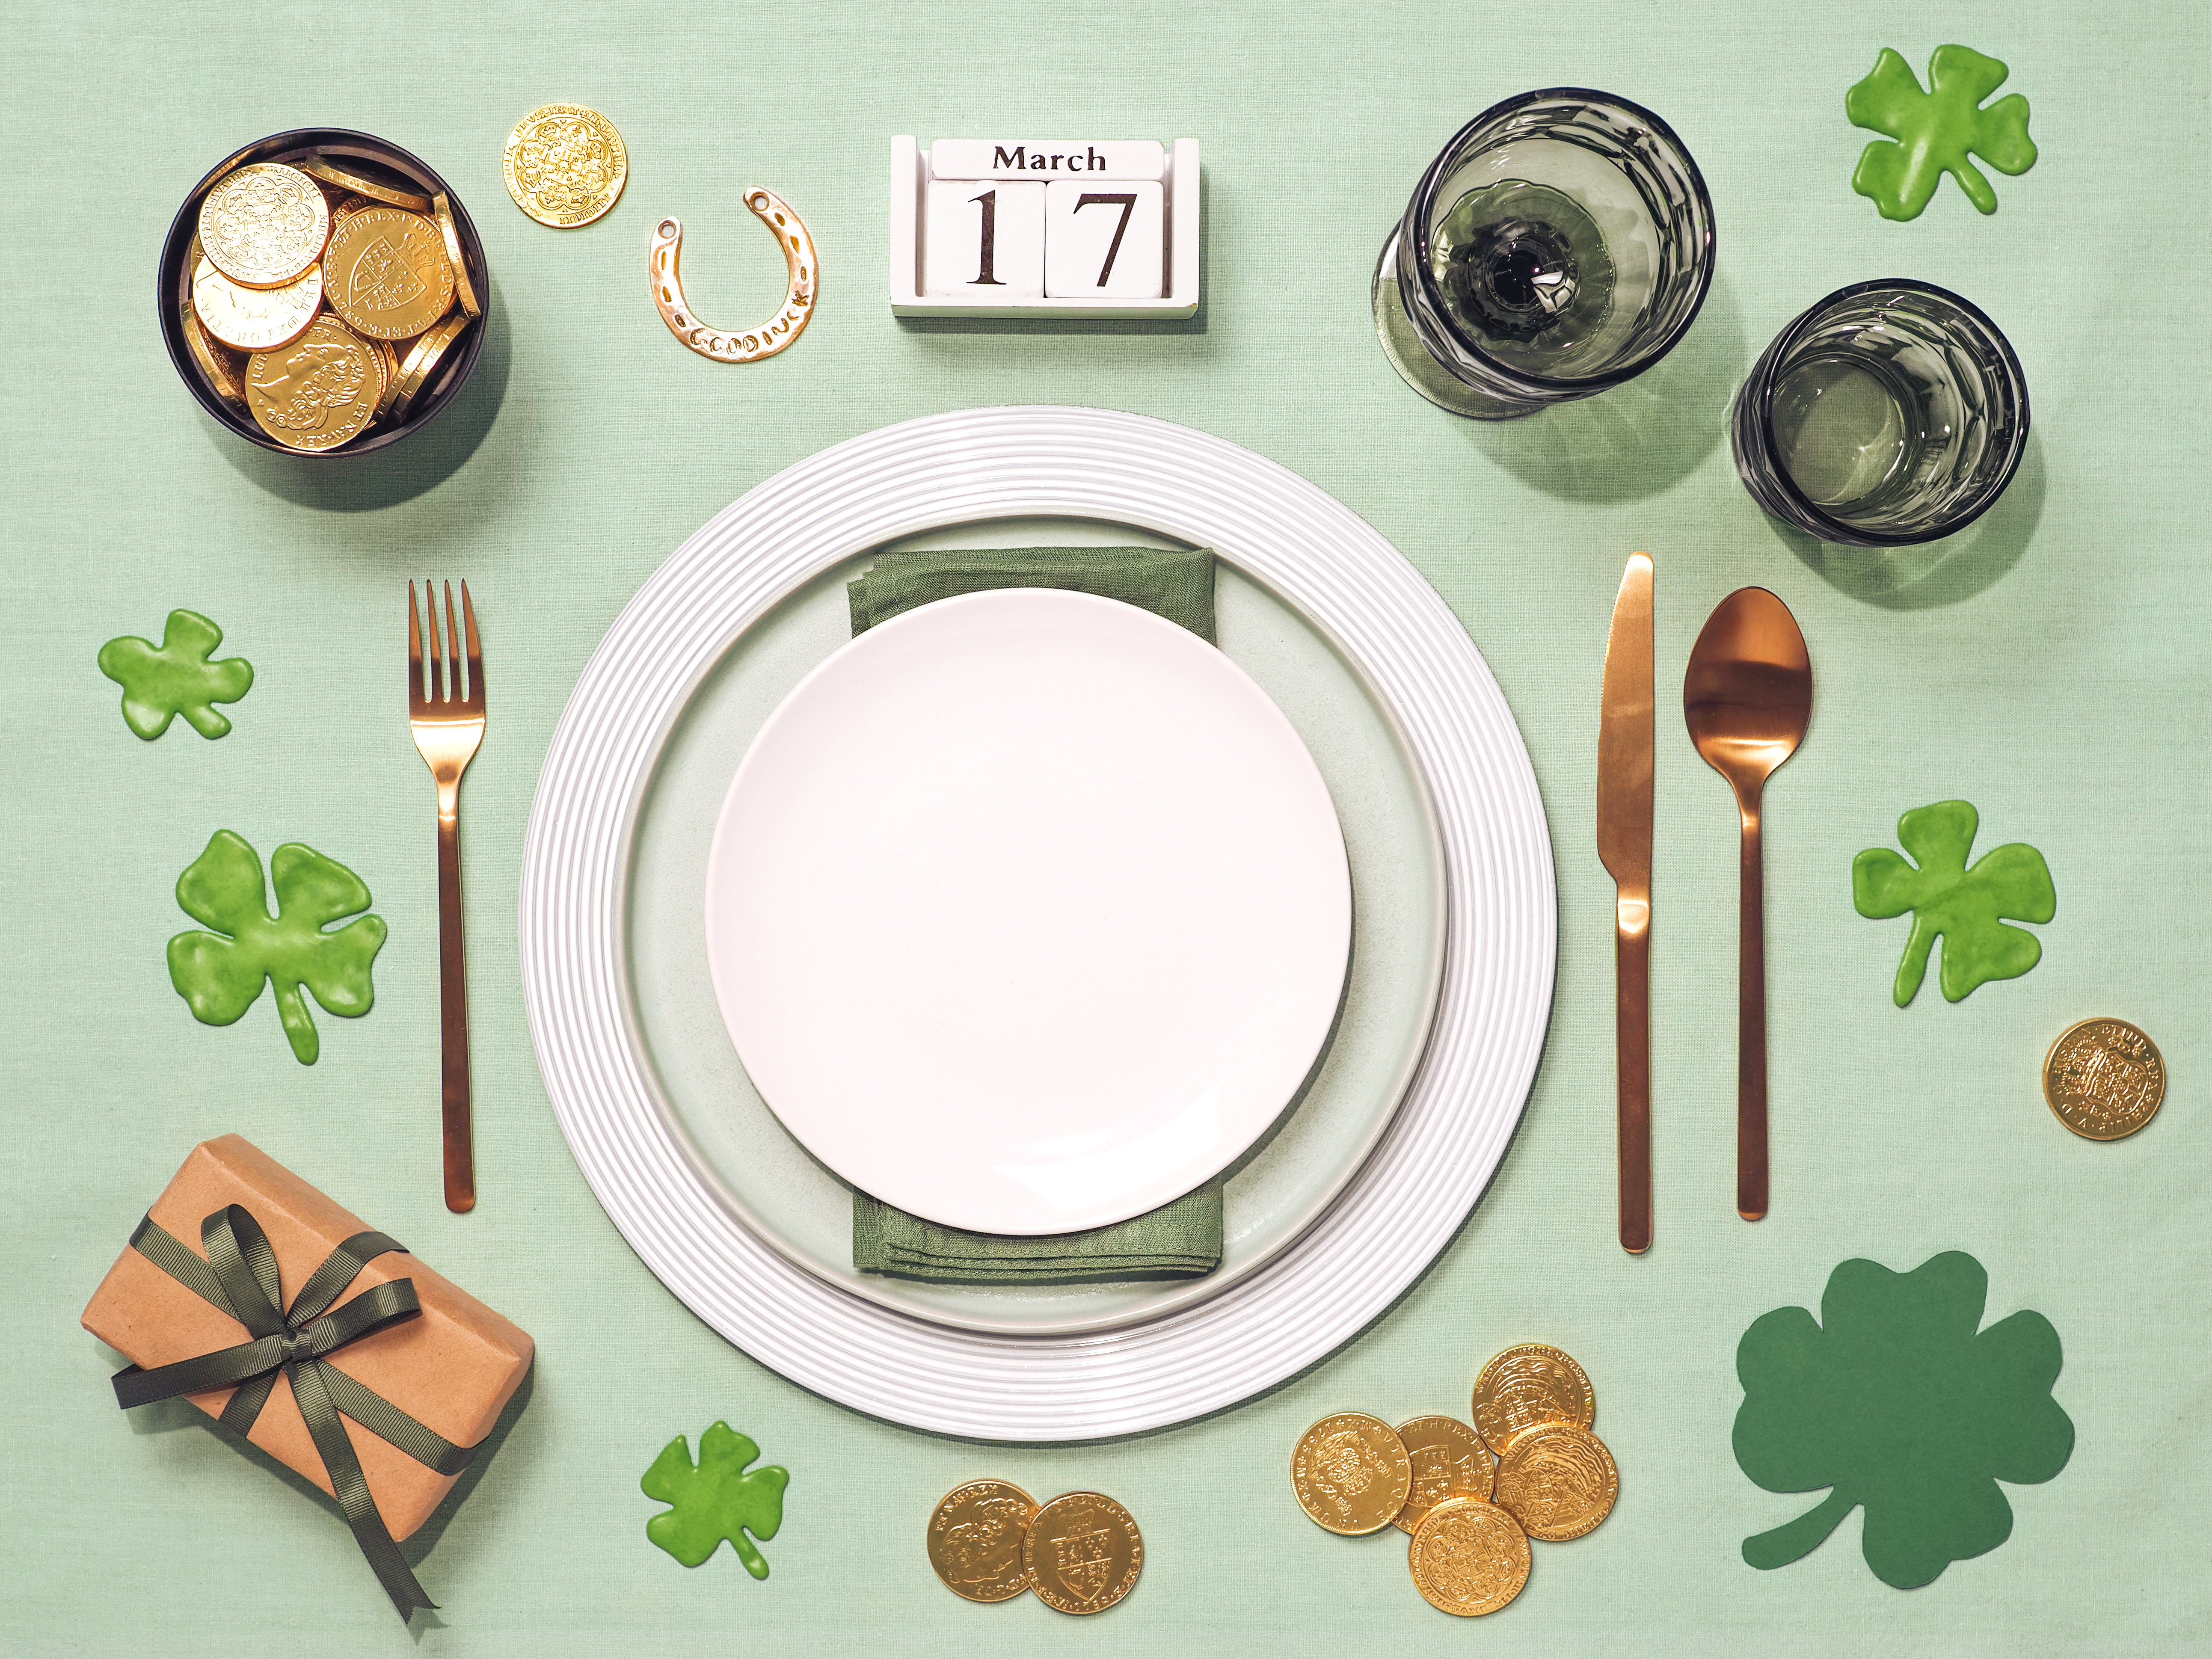 10 Ways to Eat Green on Saint Patrick's Day